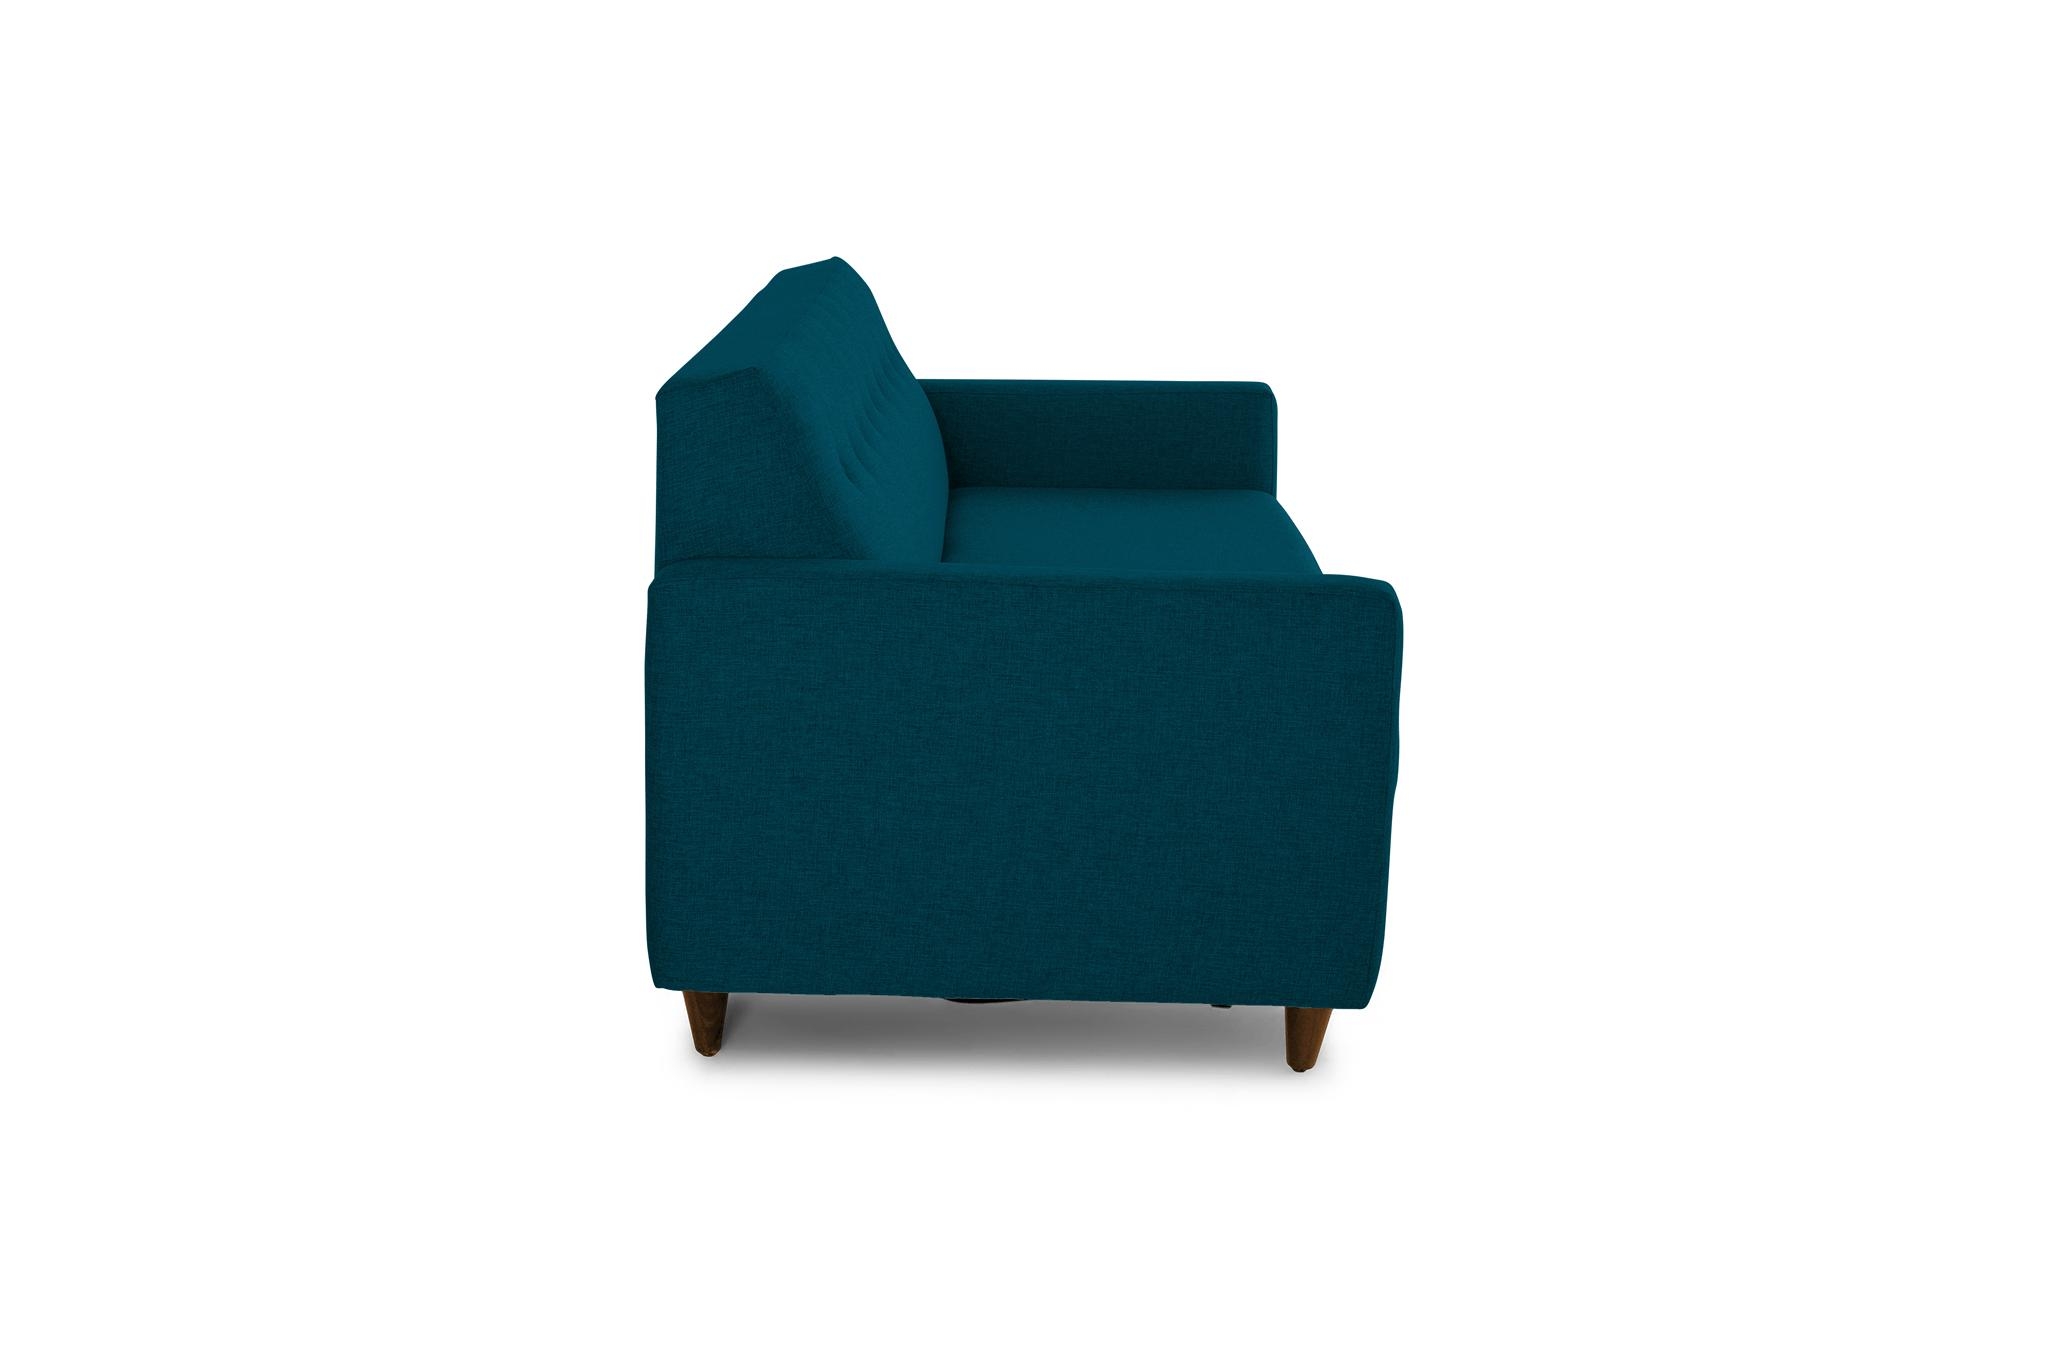 Blue Korver Mid Century Modern Sleeper Sofa - Key Largo Zenith Teal - Mocha - Image 3